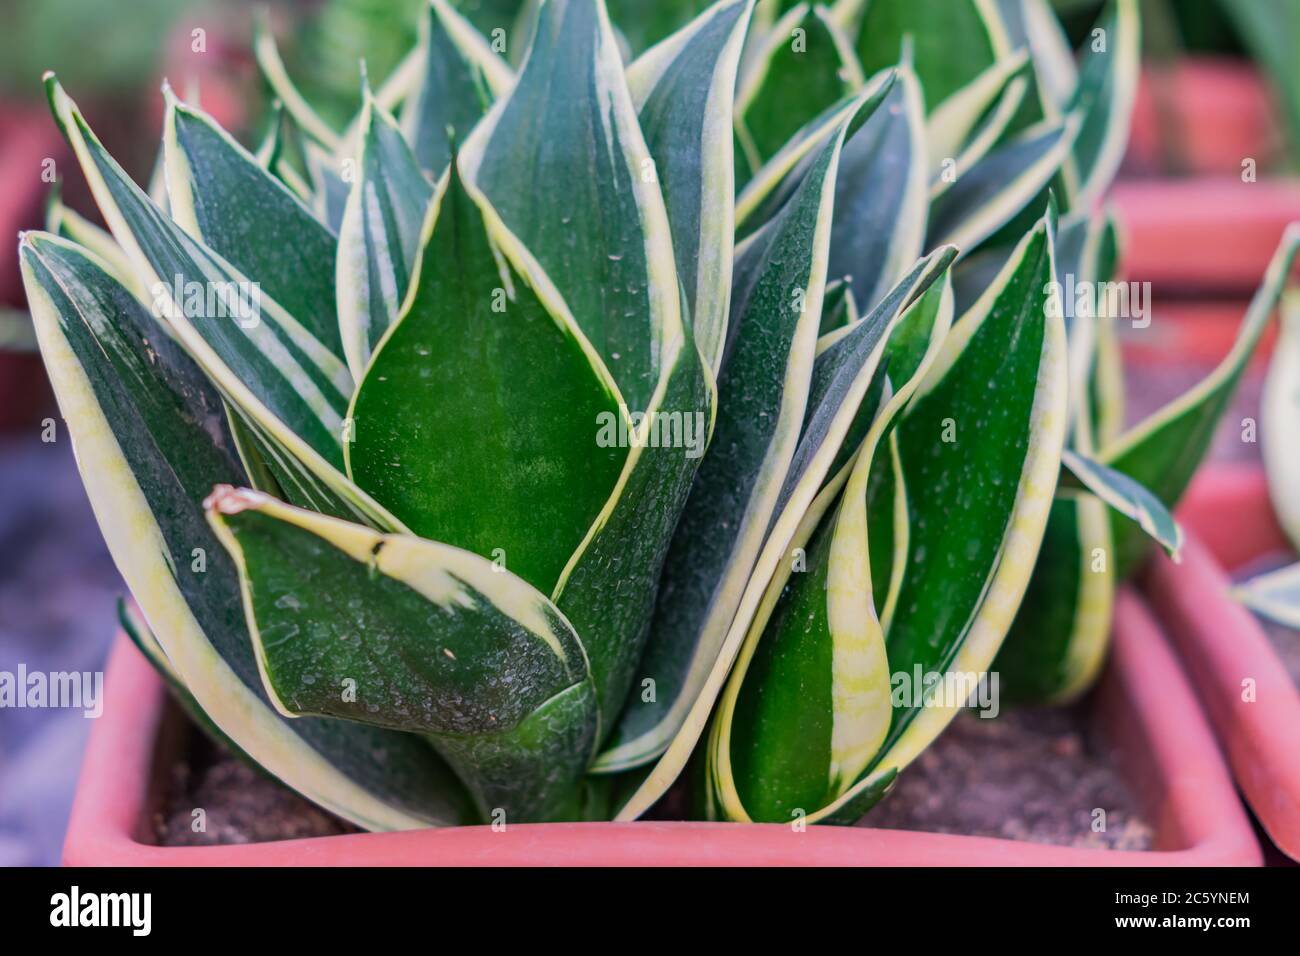 Sansevieria plant in a pot Stock Photo